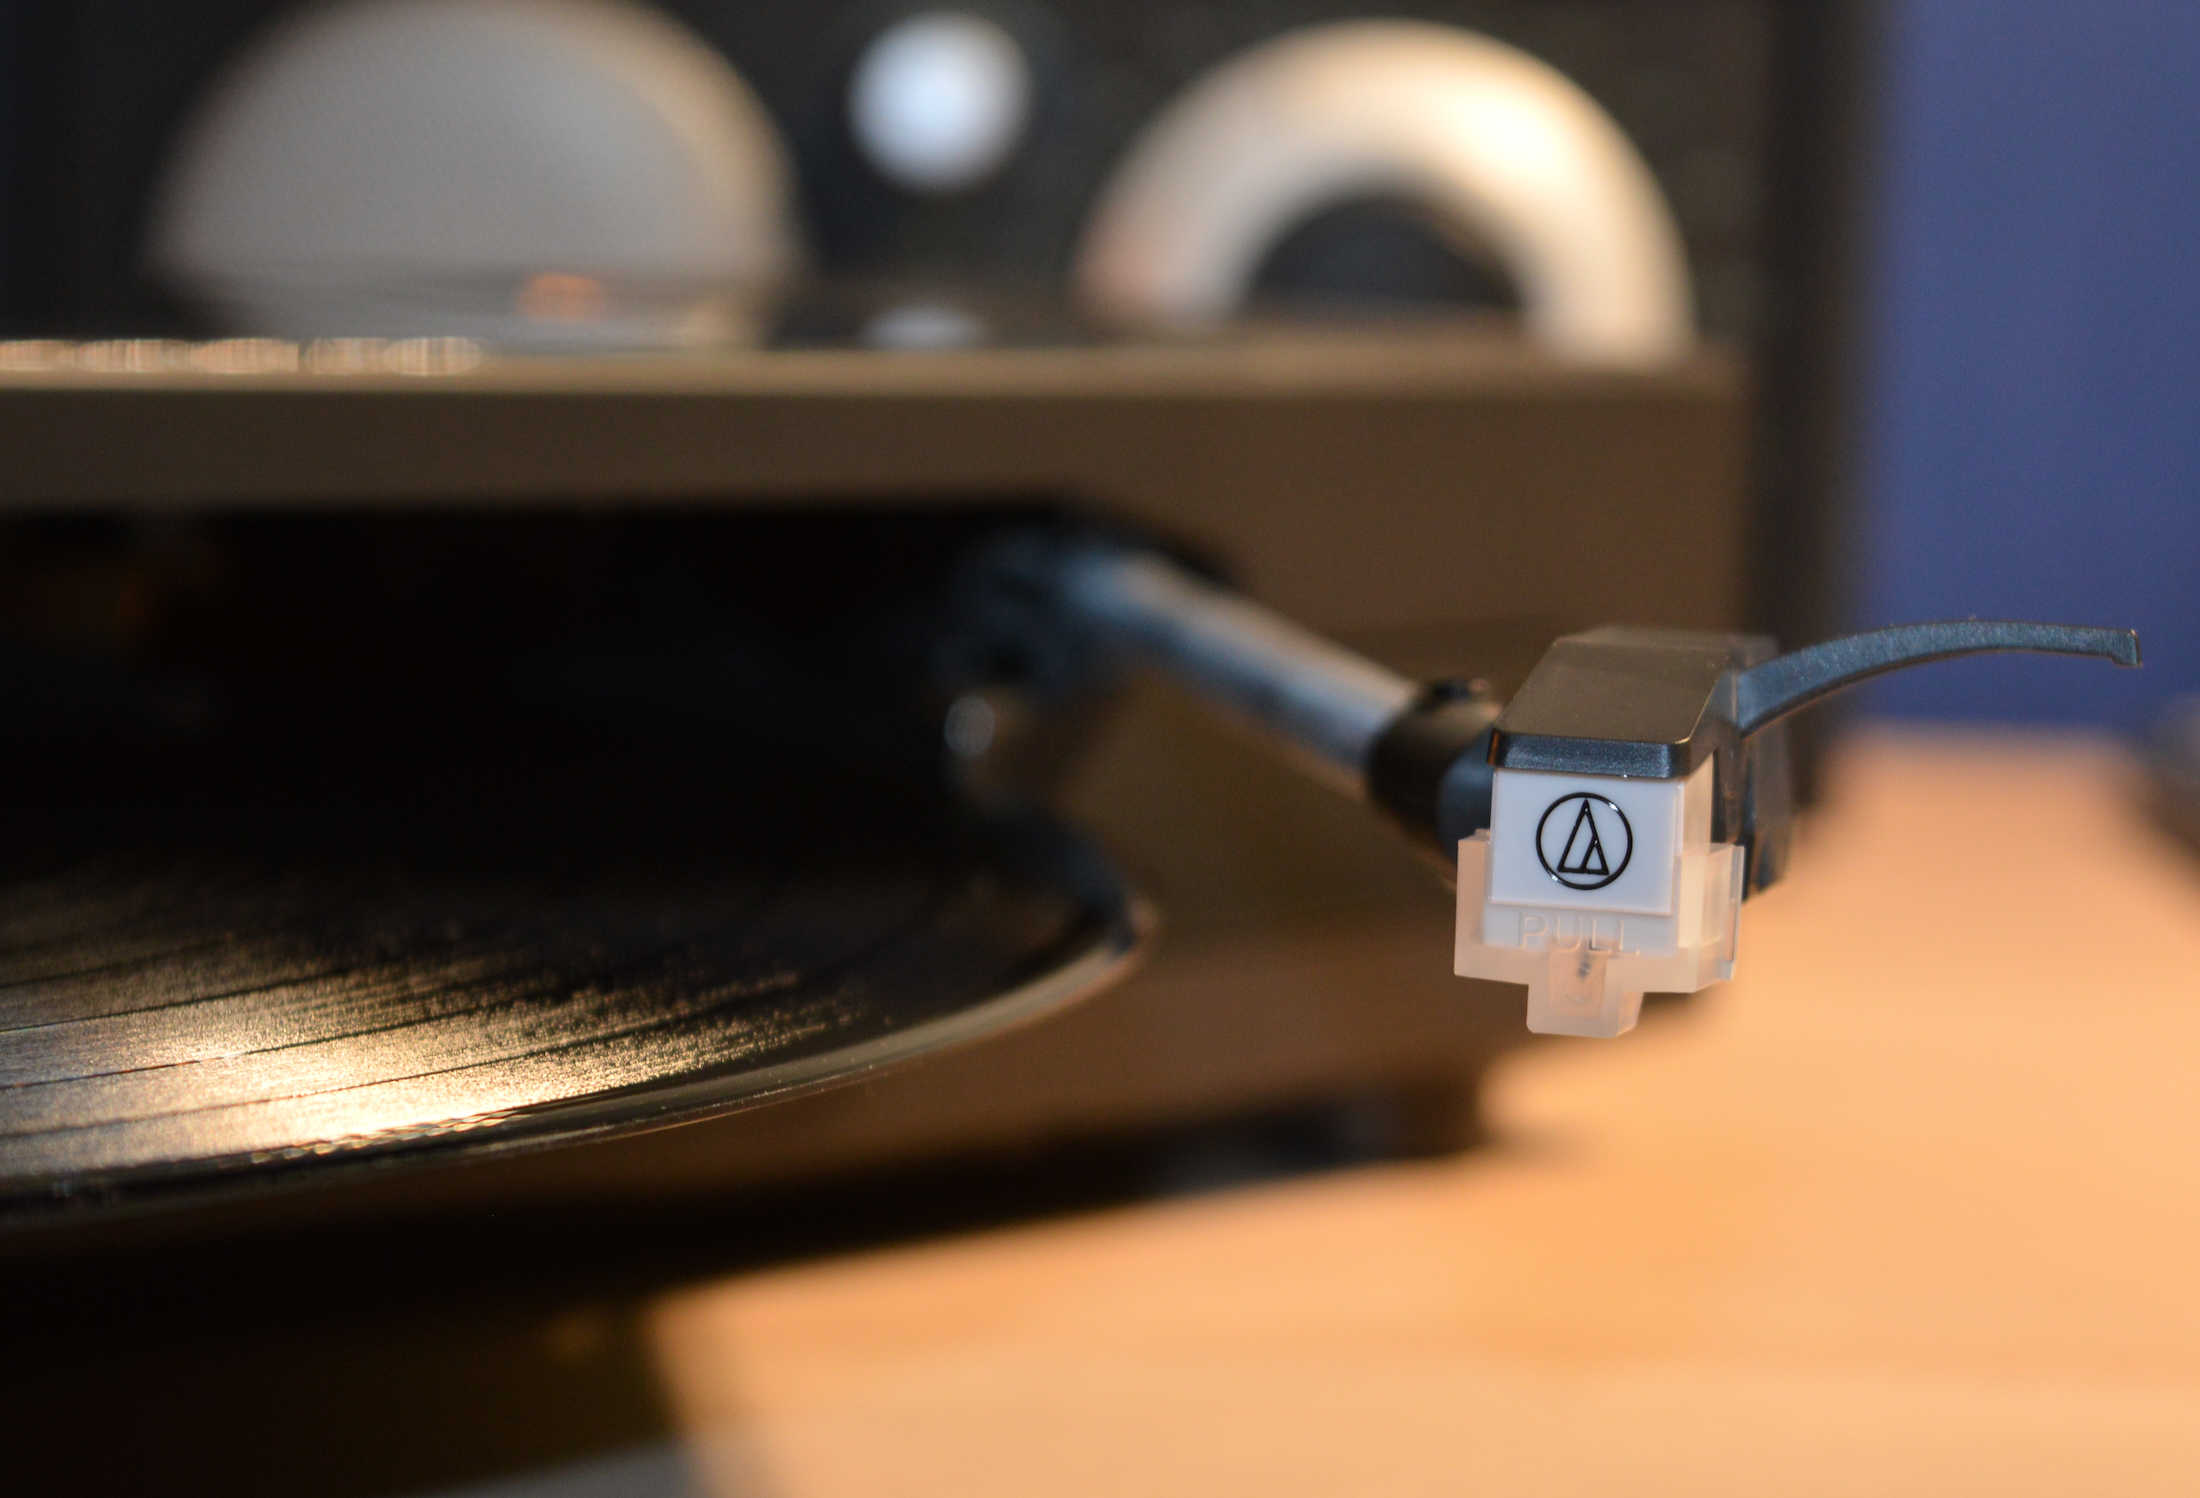 Audio-Technica Wireless Record Player Sound Burger USB Bluetooth